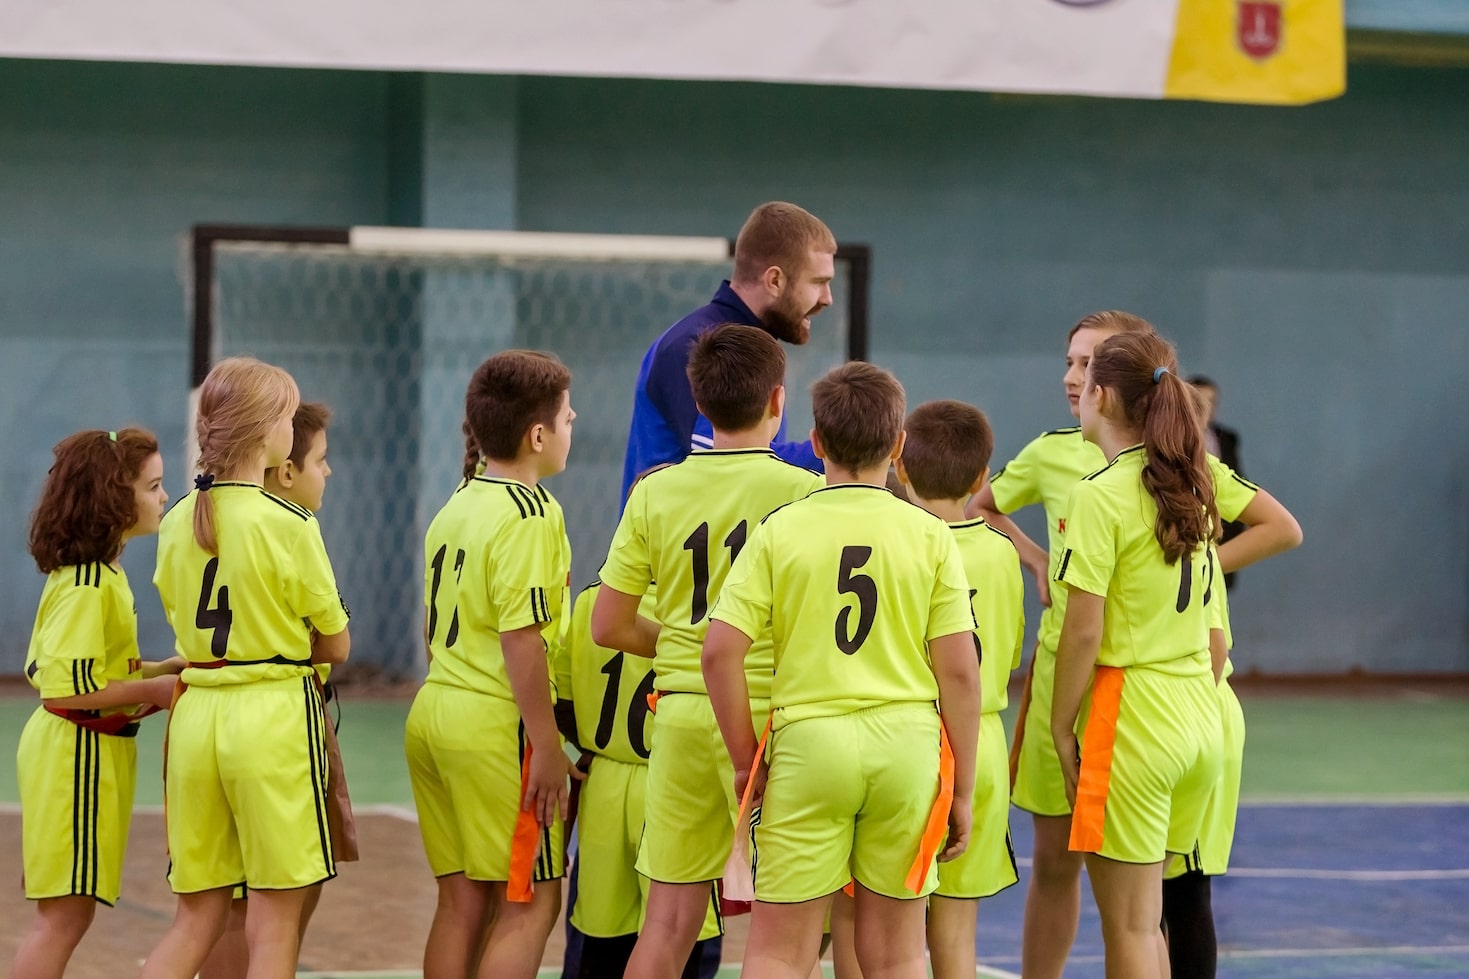 Youth soccer coaching